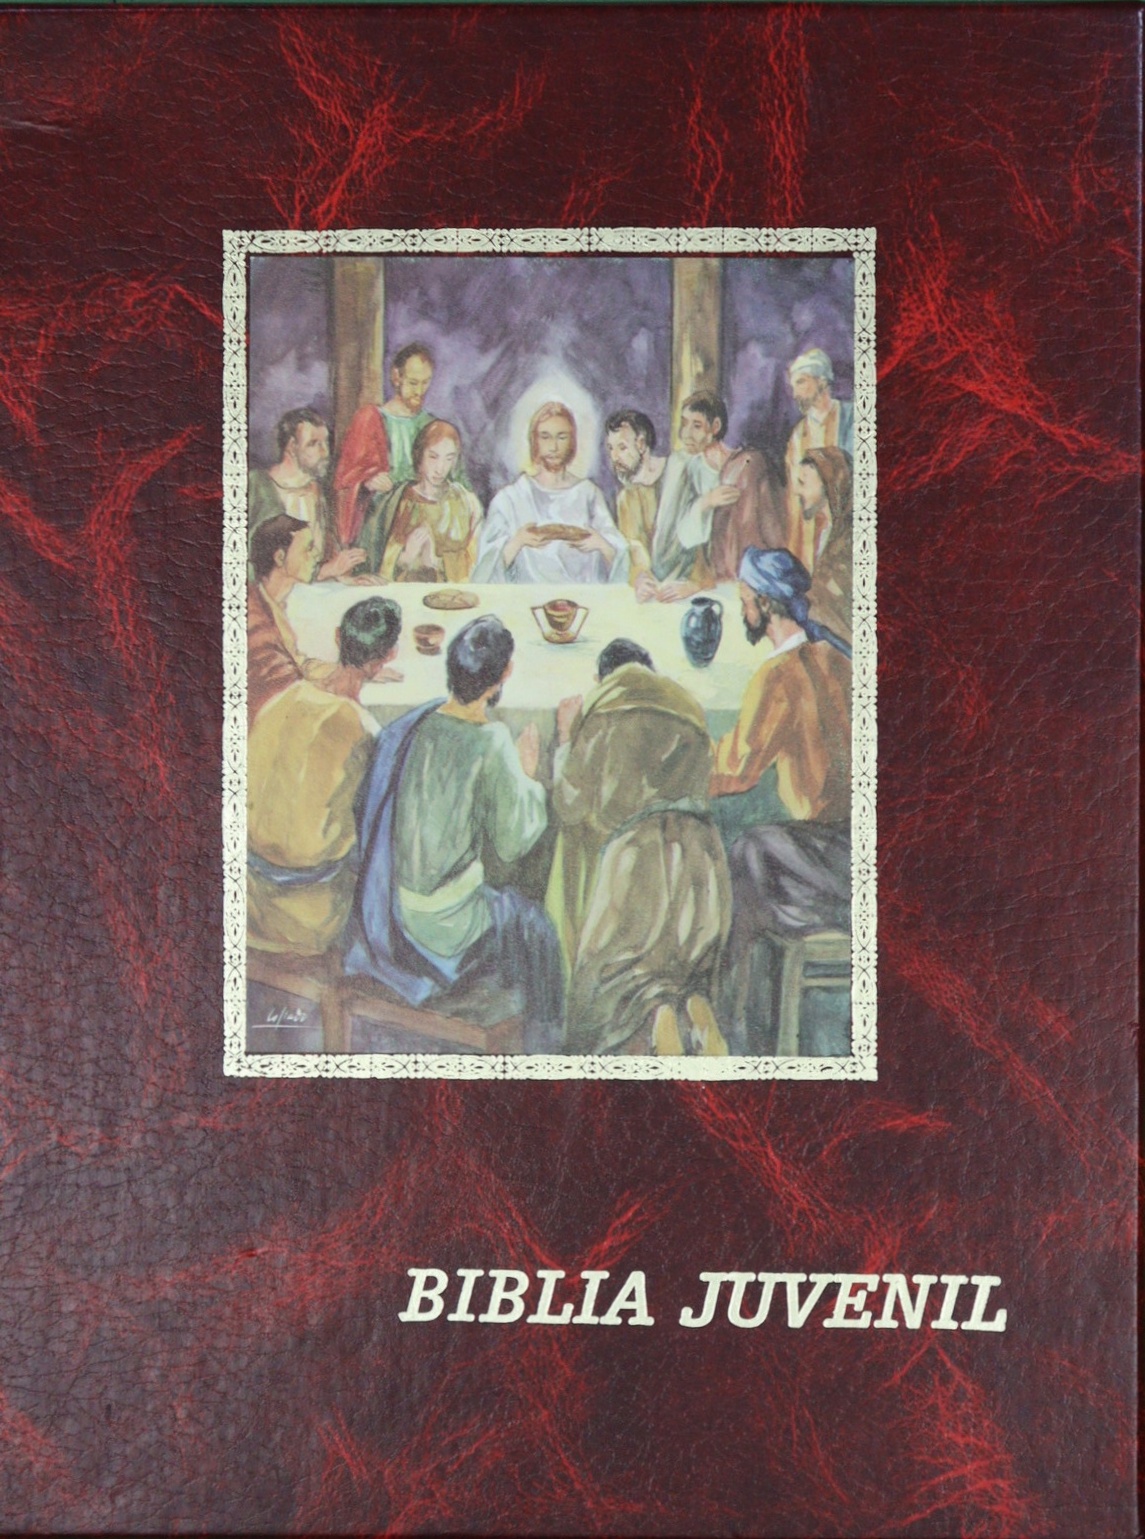 Biblia juvenil - VV.AA.